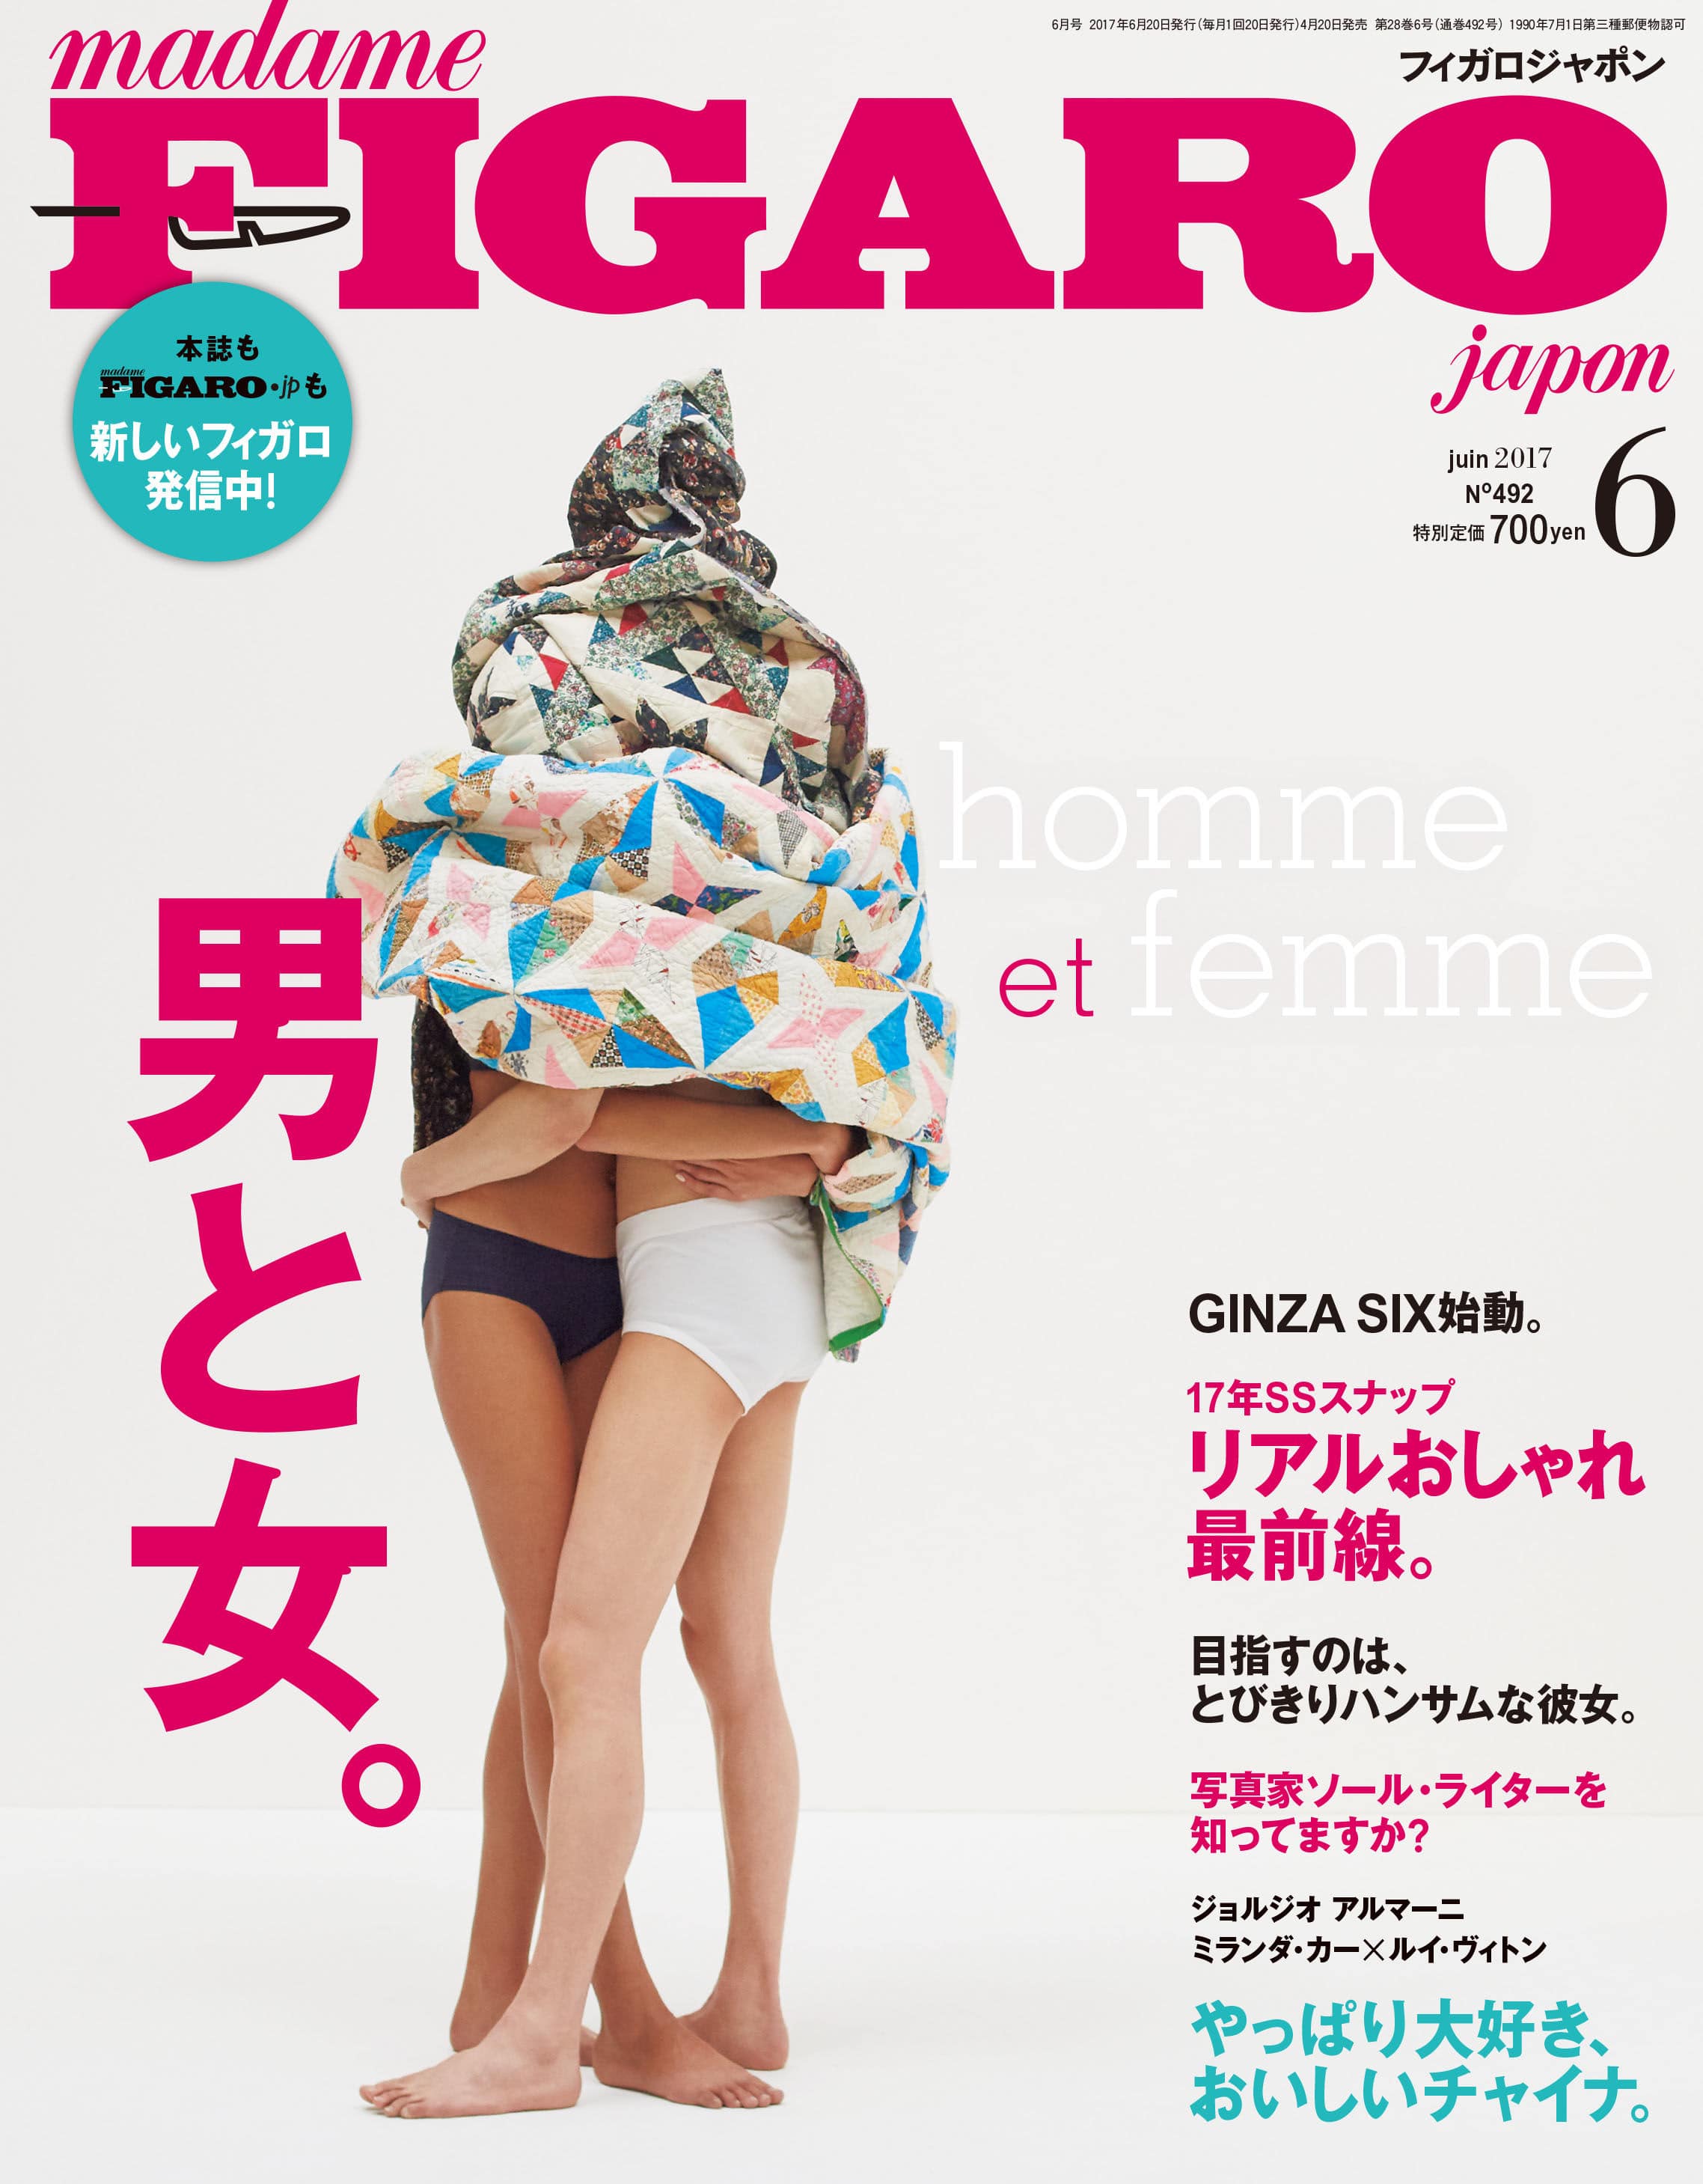 Homme Et Femme 男と女 Magazine Madame Figaro Jp フィガロジャポン